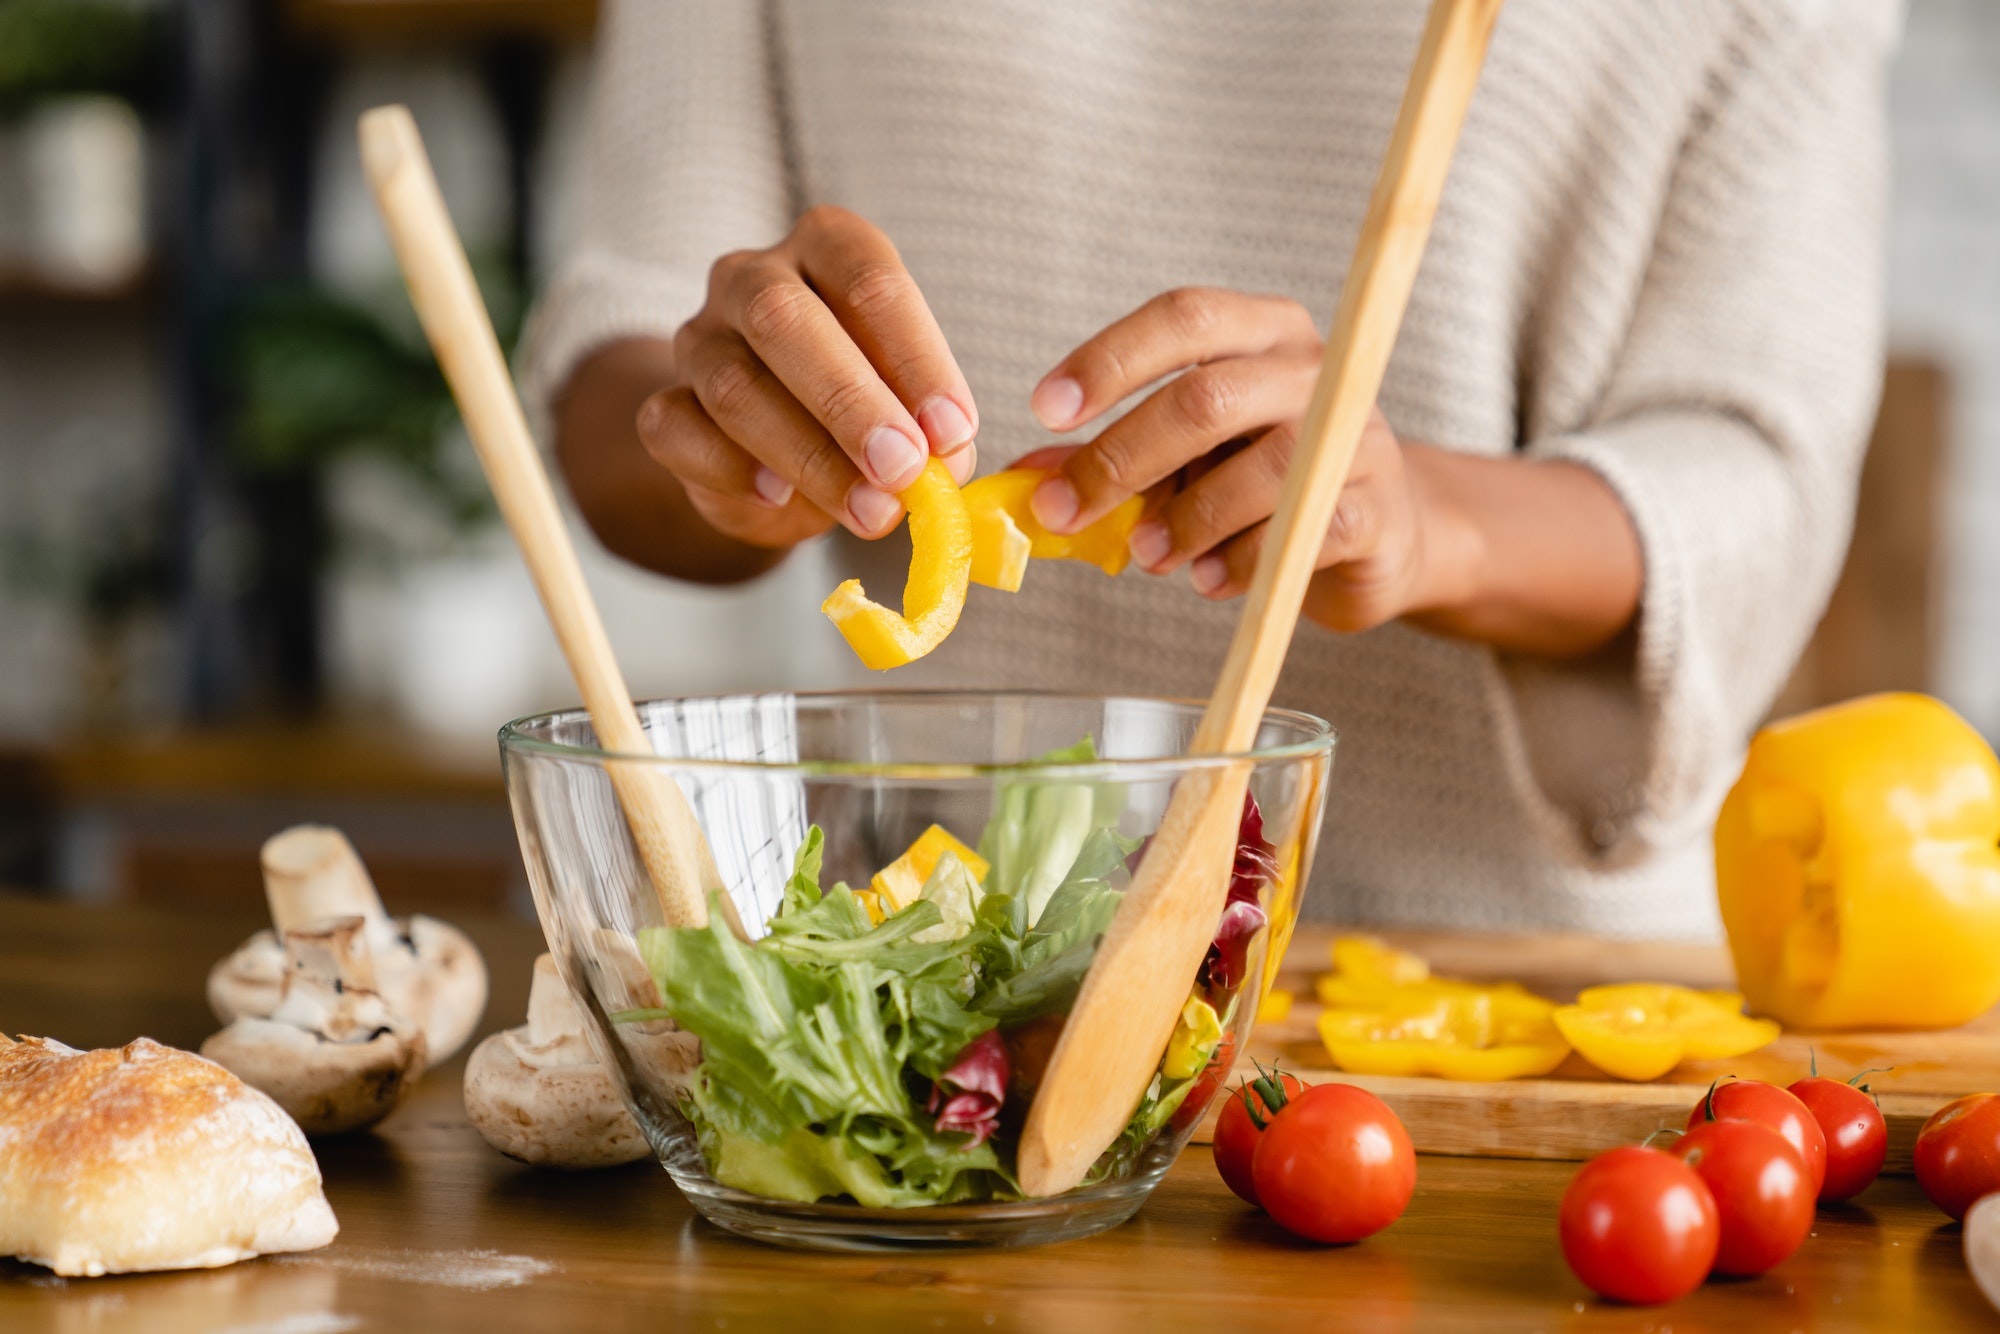 Woman`s hands making vegetable salad, cutting vegetables for vegan vegetarian food meal at kitchen.